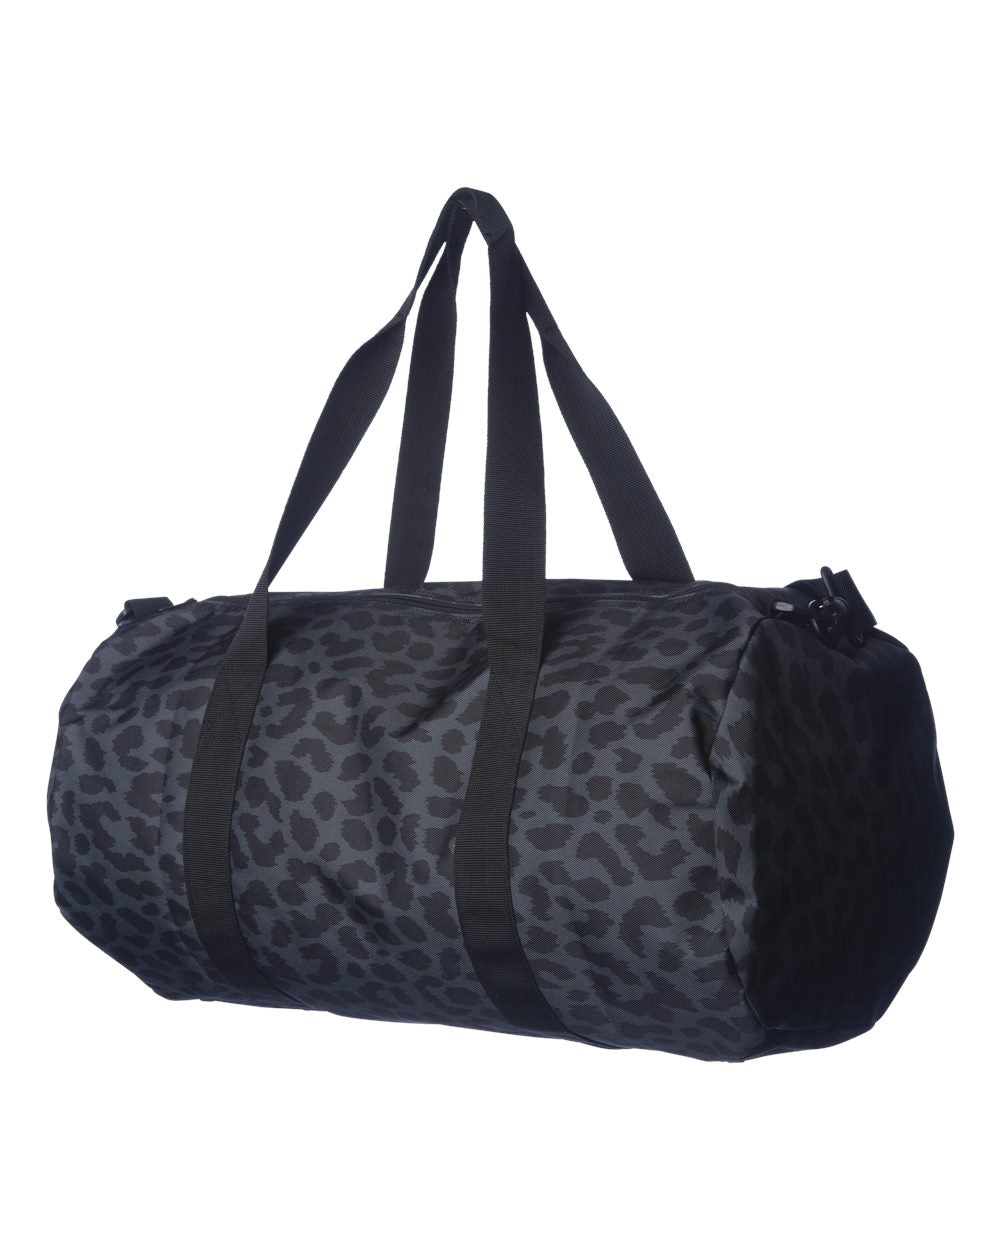 Independent Trading Co. 29L Day Tripper Duffel Bag INDDUFBAG #color_Black Cheetah